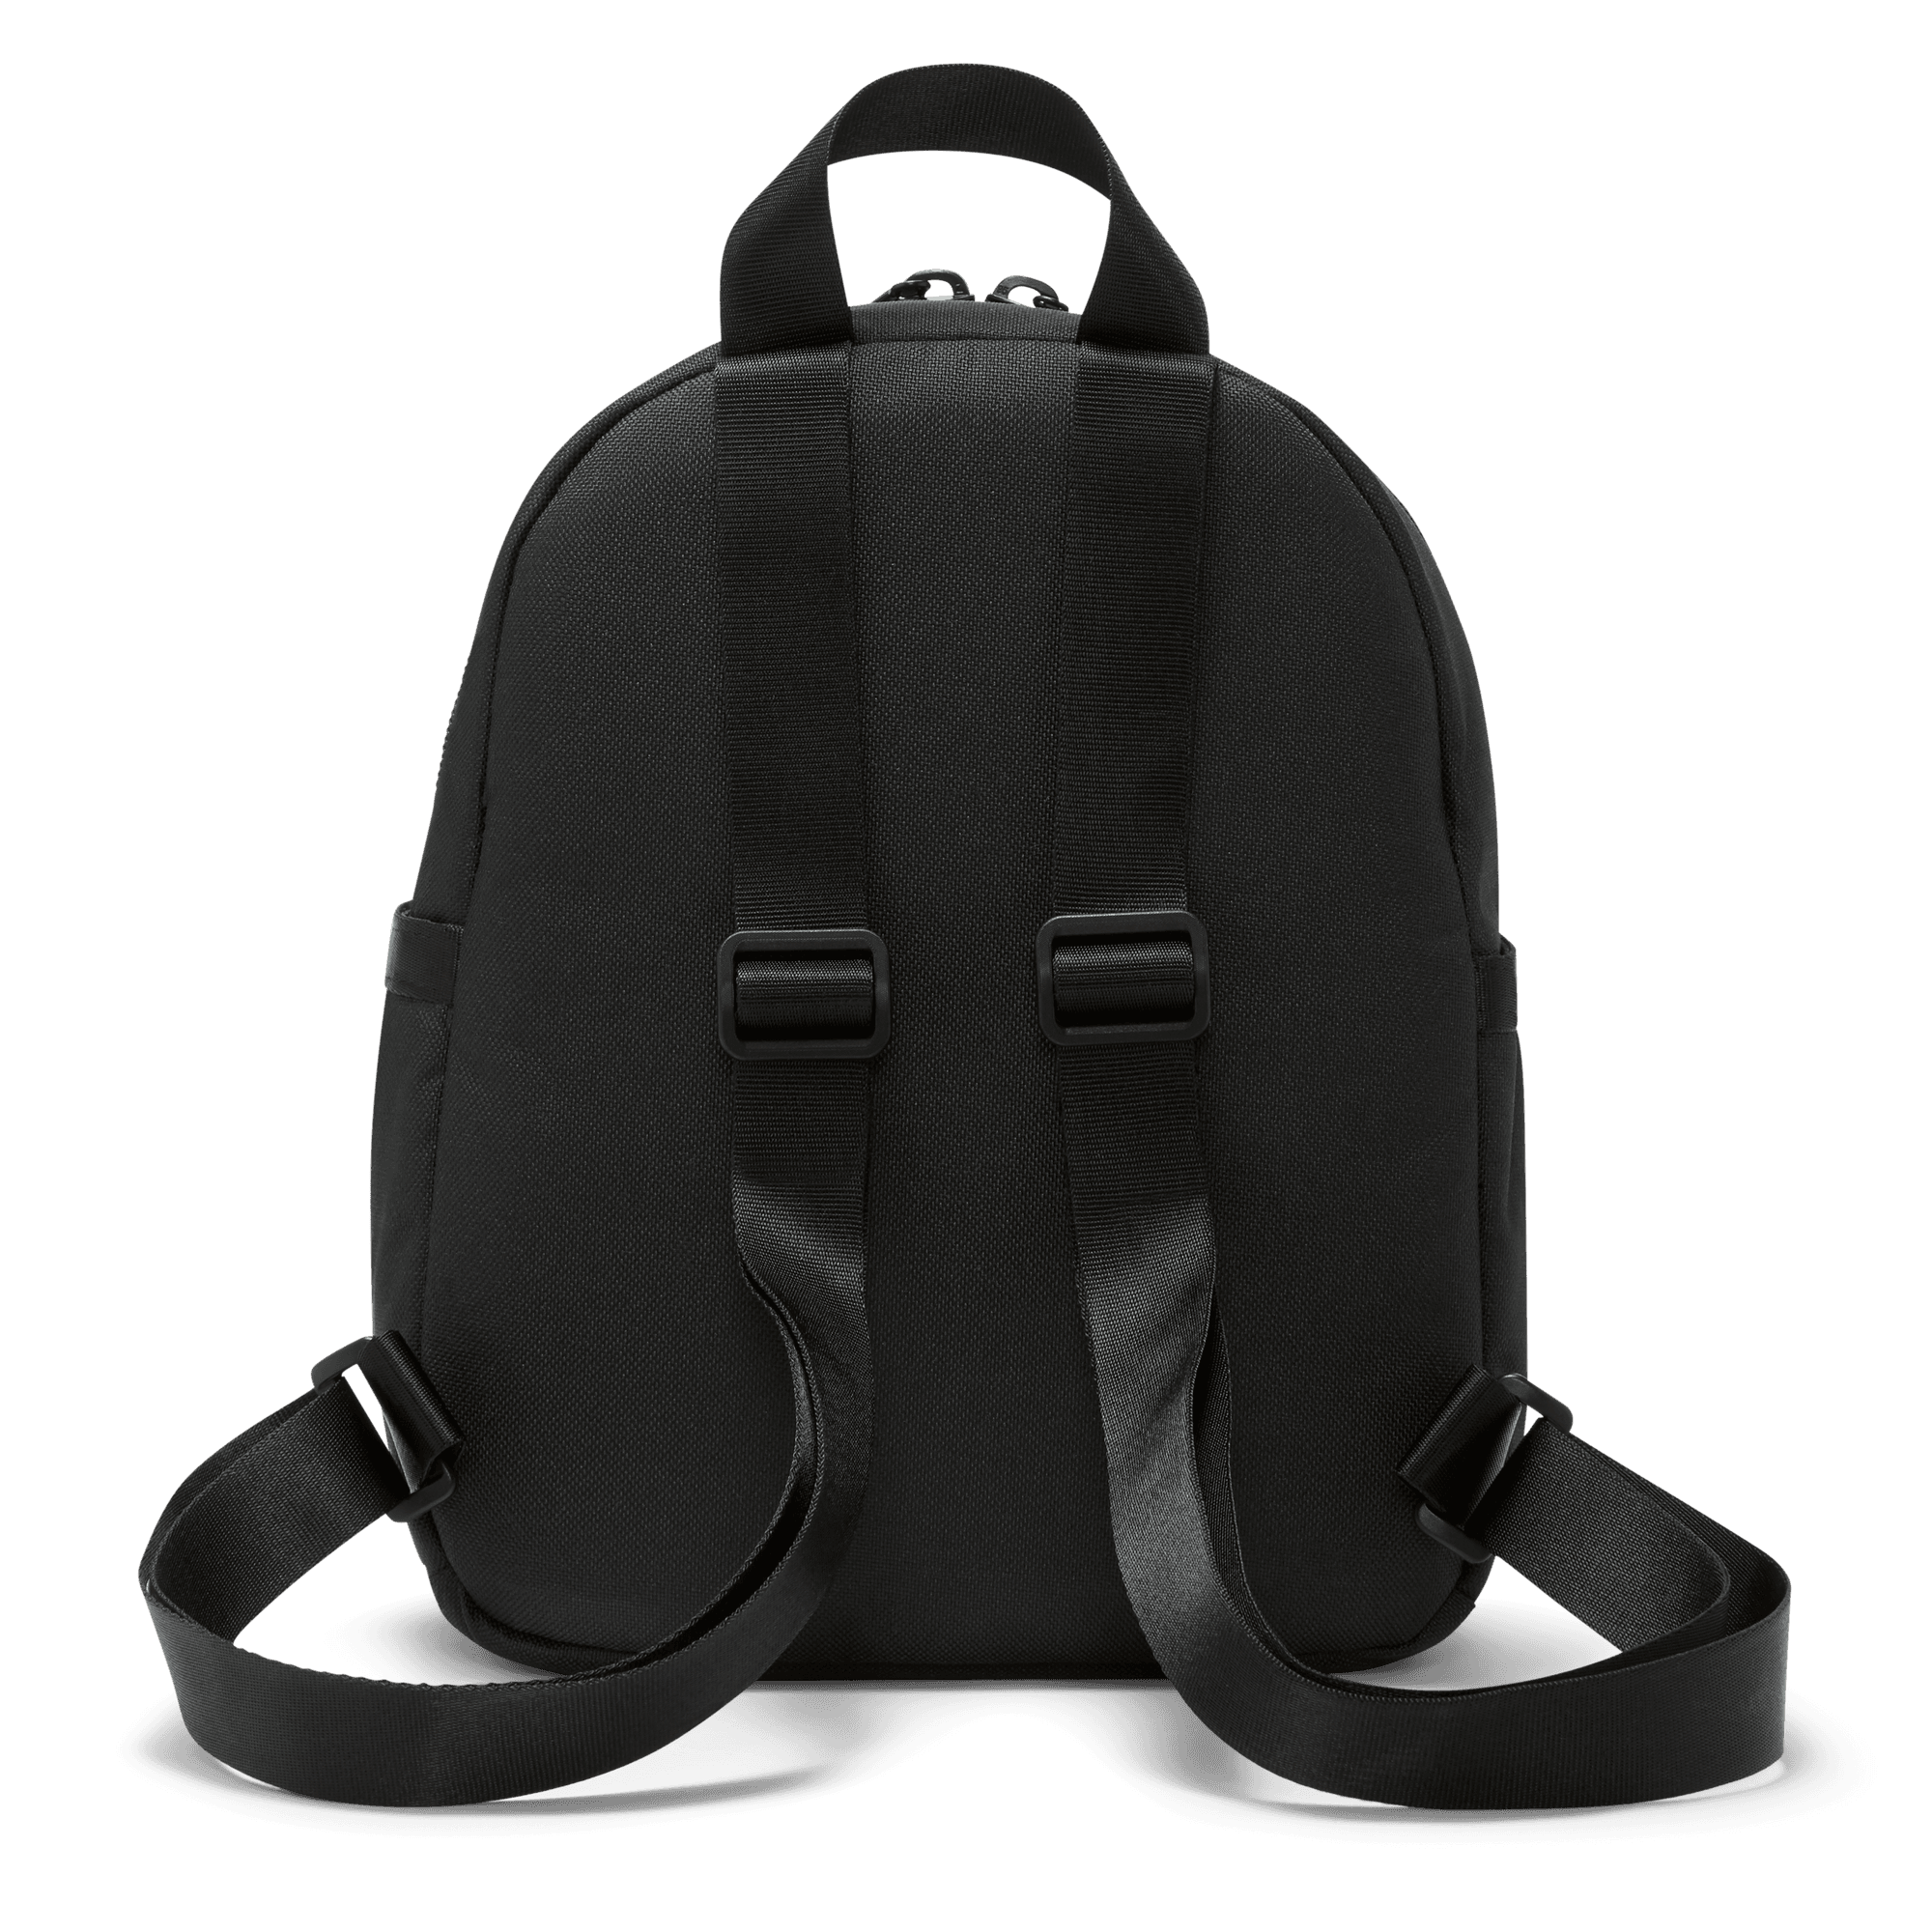 Nike - Accessories - Futura 365 Mini Bag - Black/White - Nohble